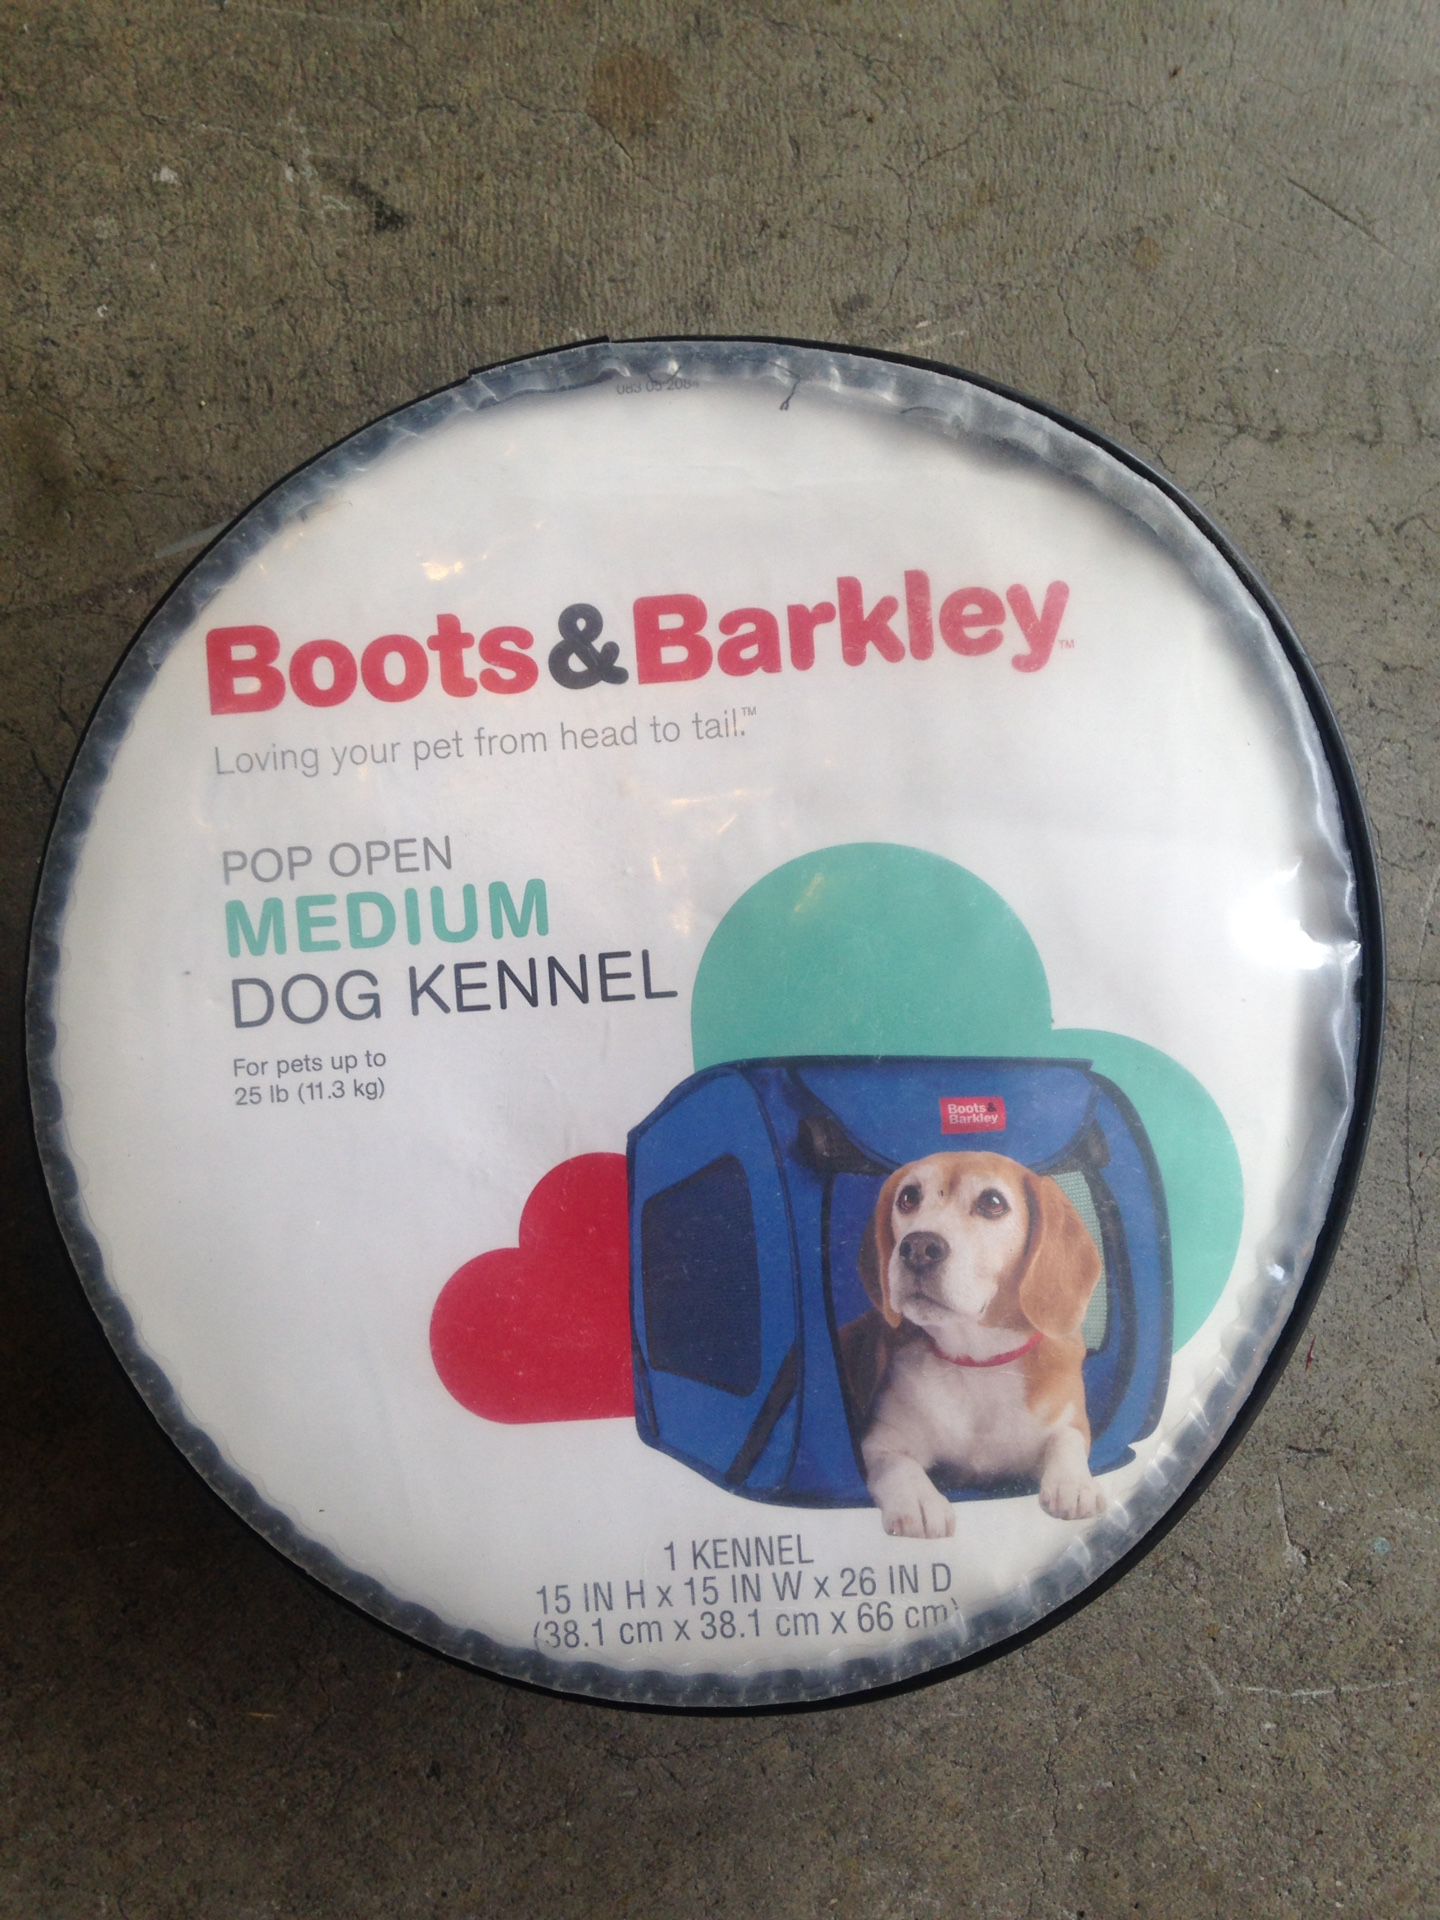 New Pop Open Medium Dog Kennel